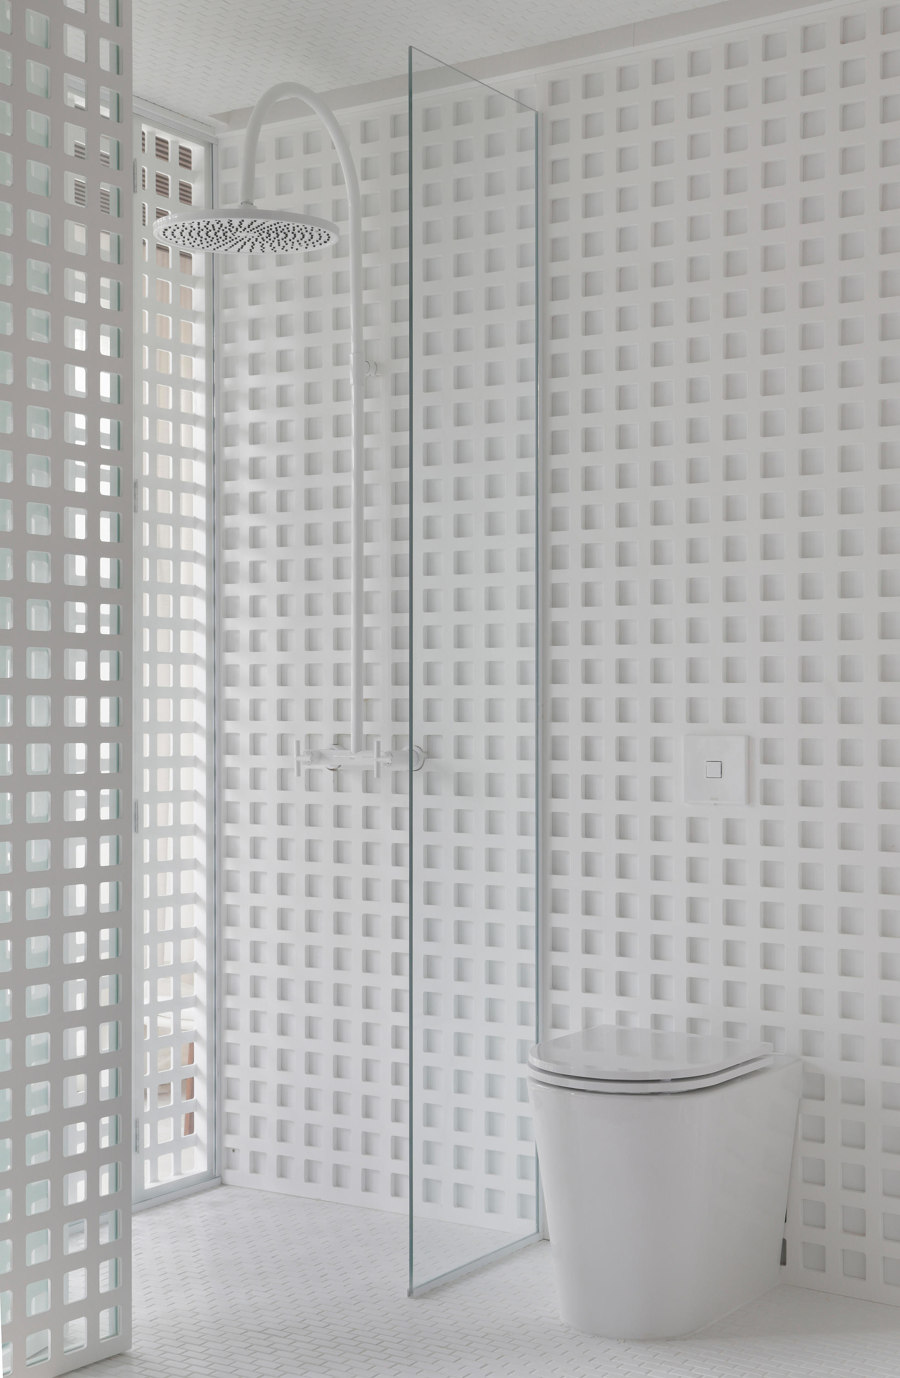 Ablution solutions: residential bathrooms up the design ante | Nouveautés